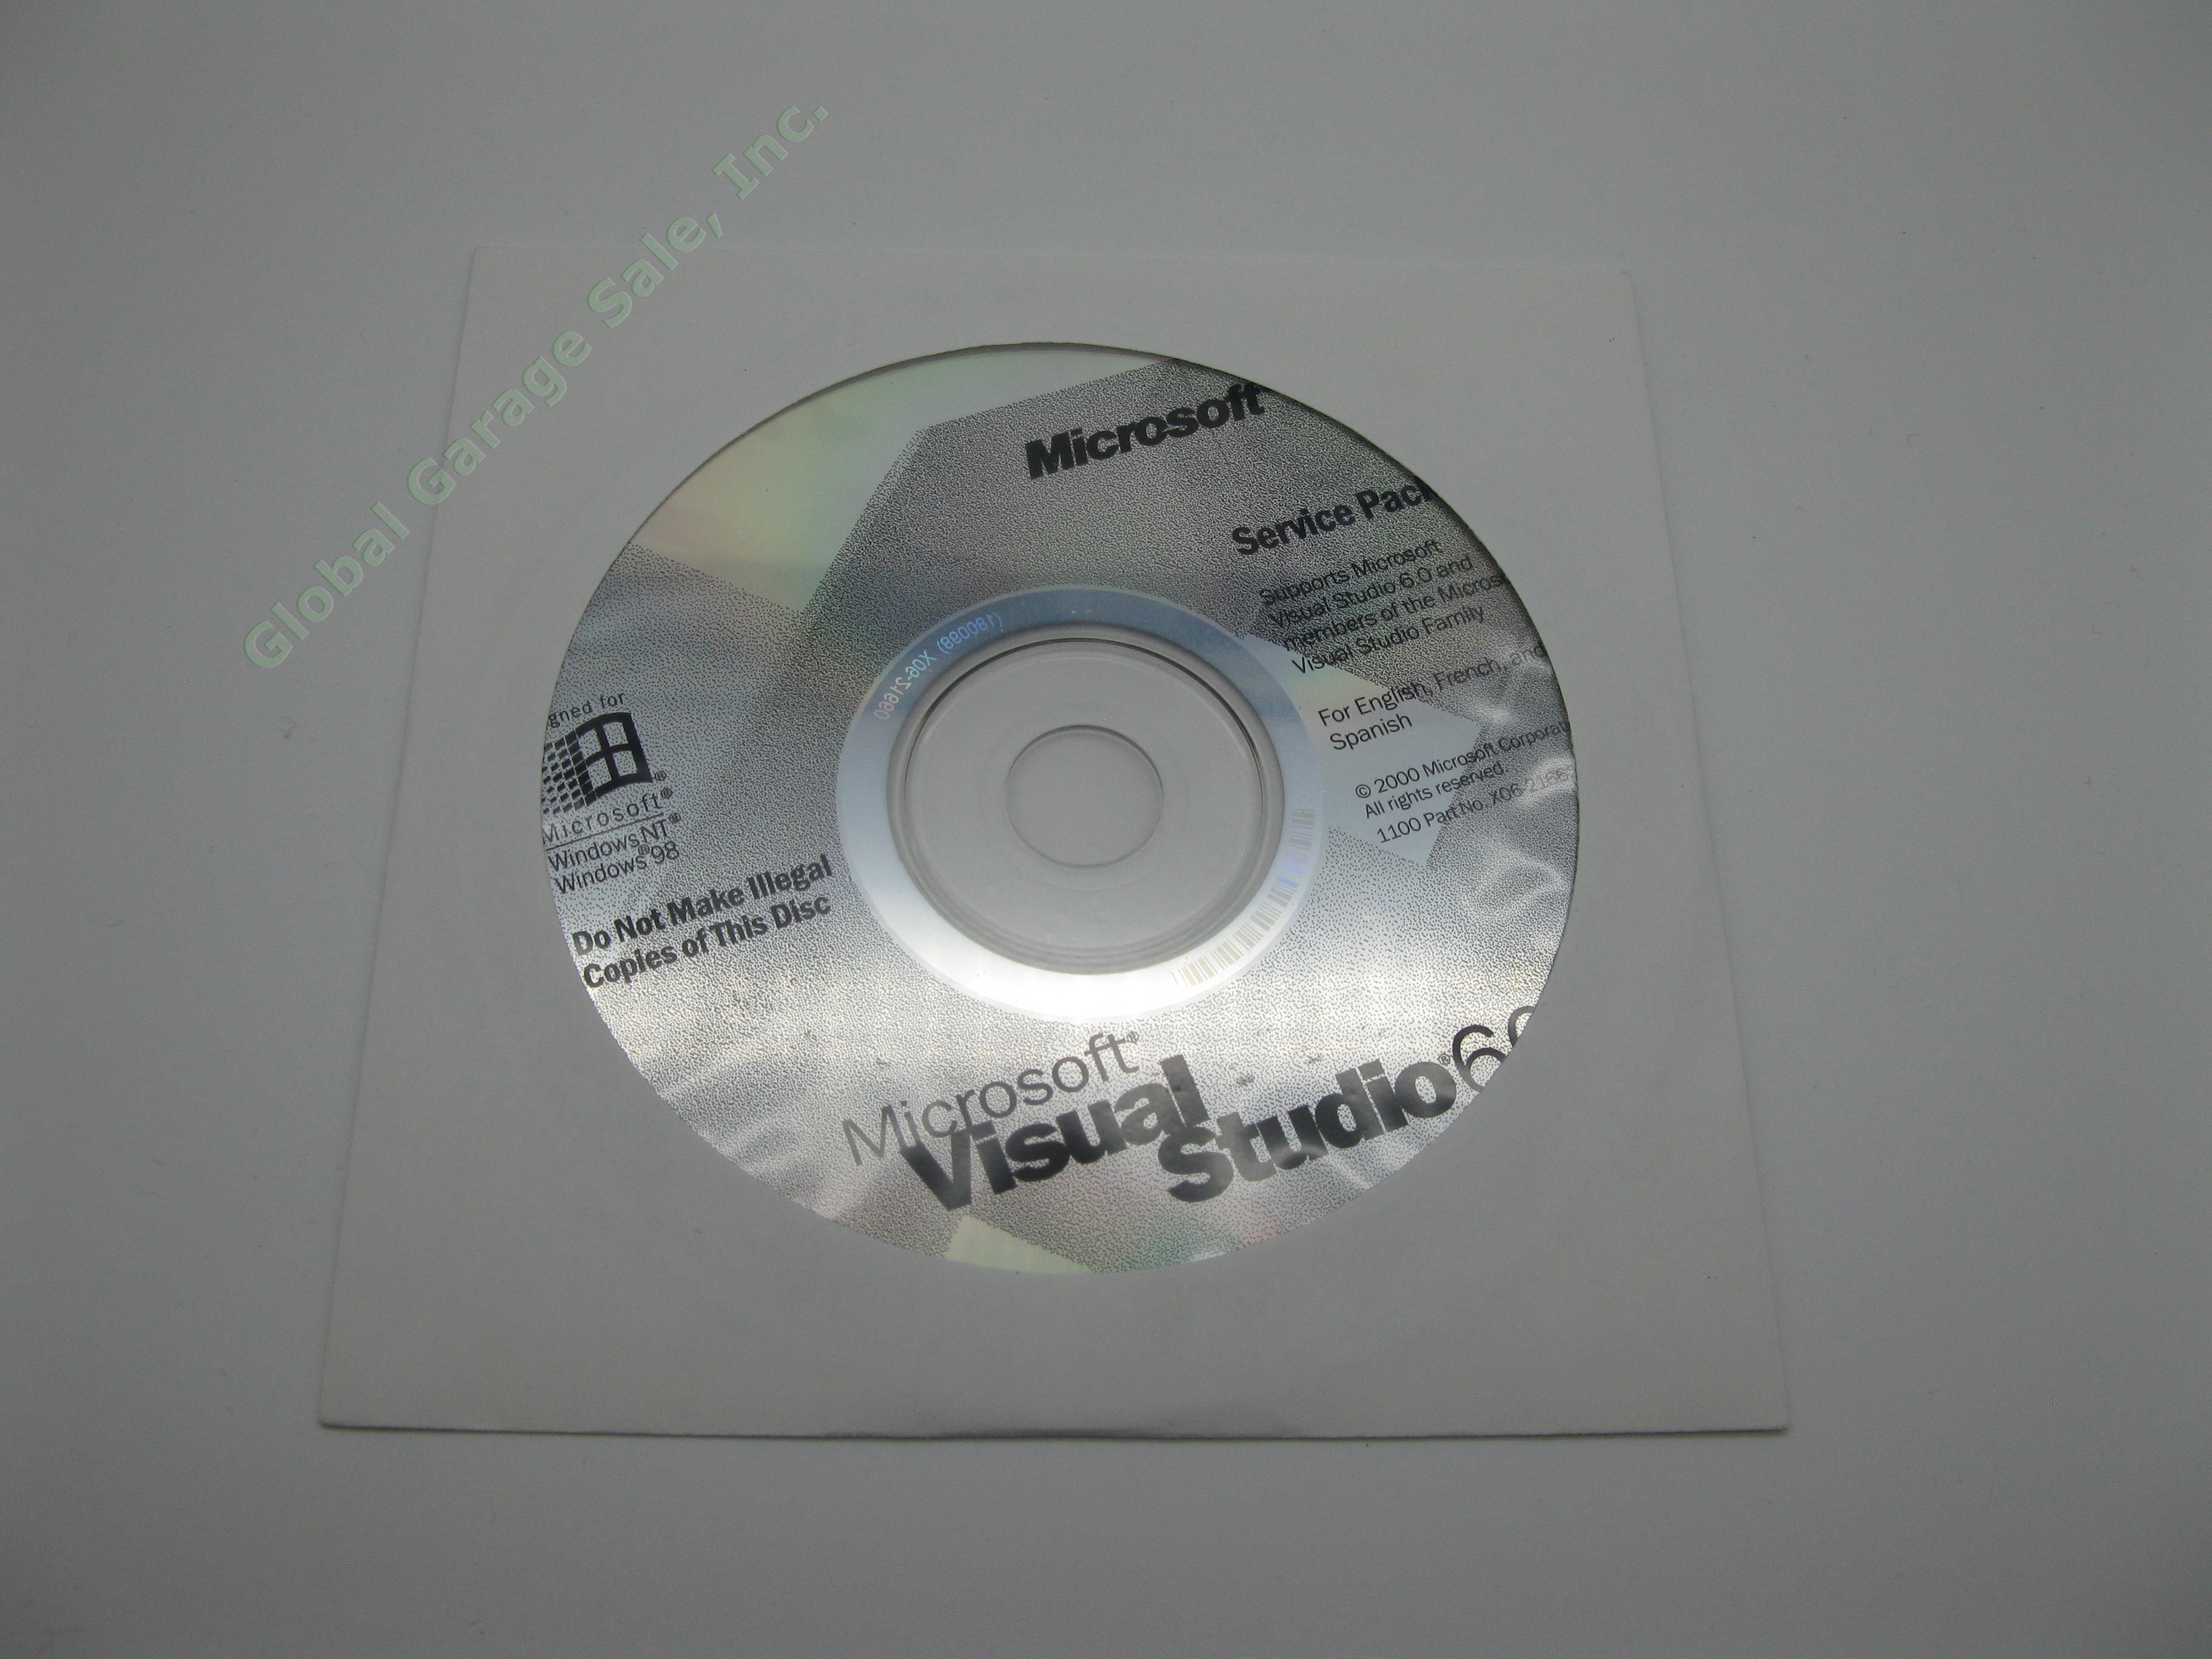 Microsoft Visual Basic 6.0 Professional Edition Pro Full Retail Box Commercial 10